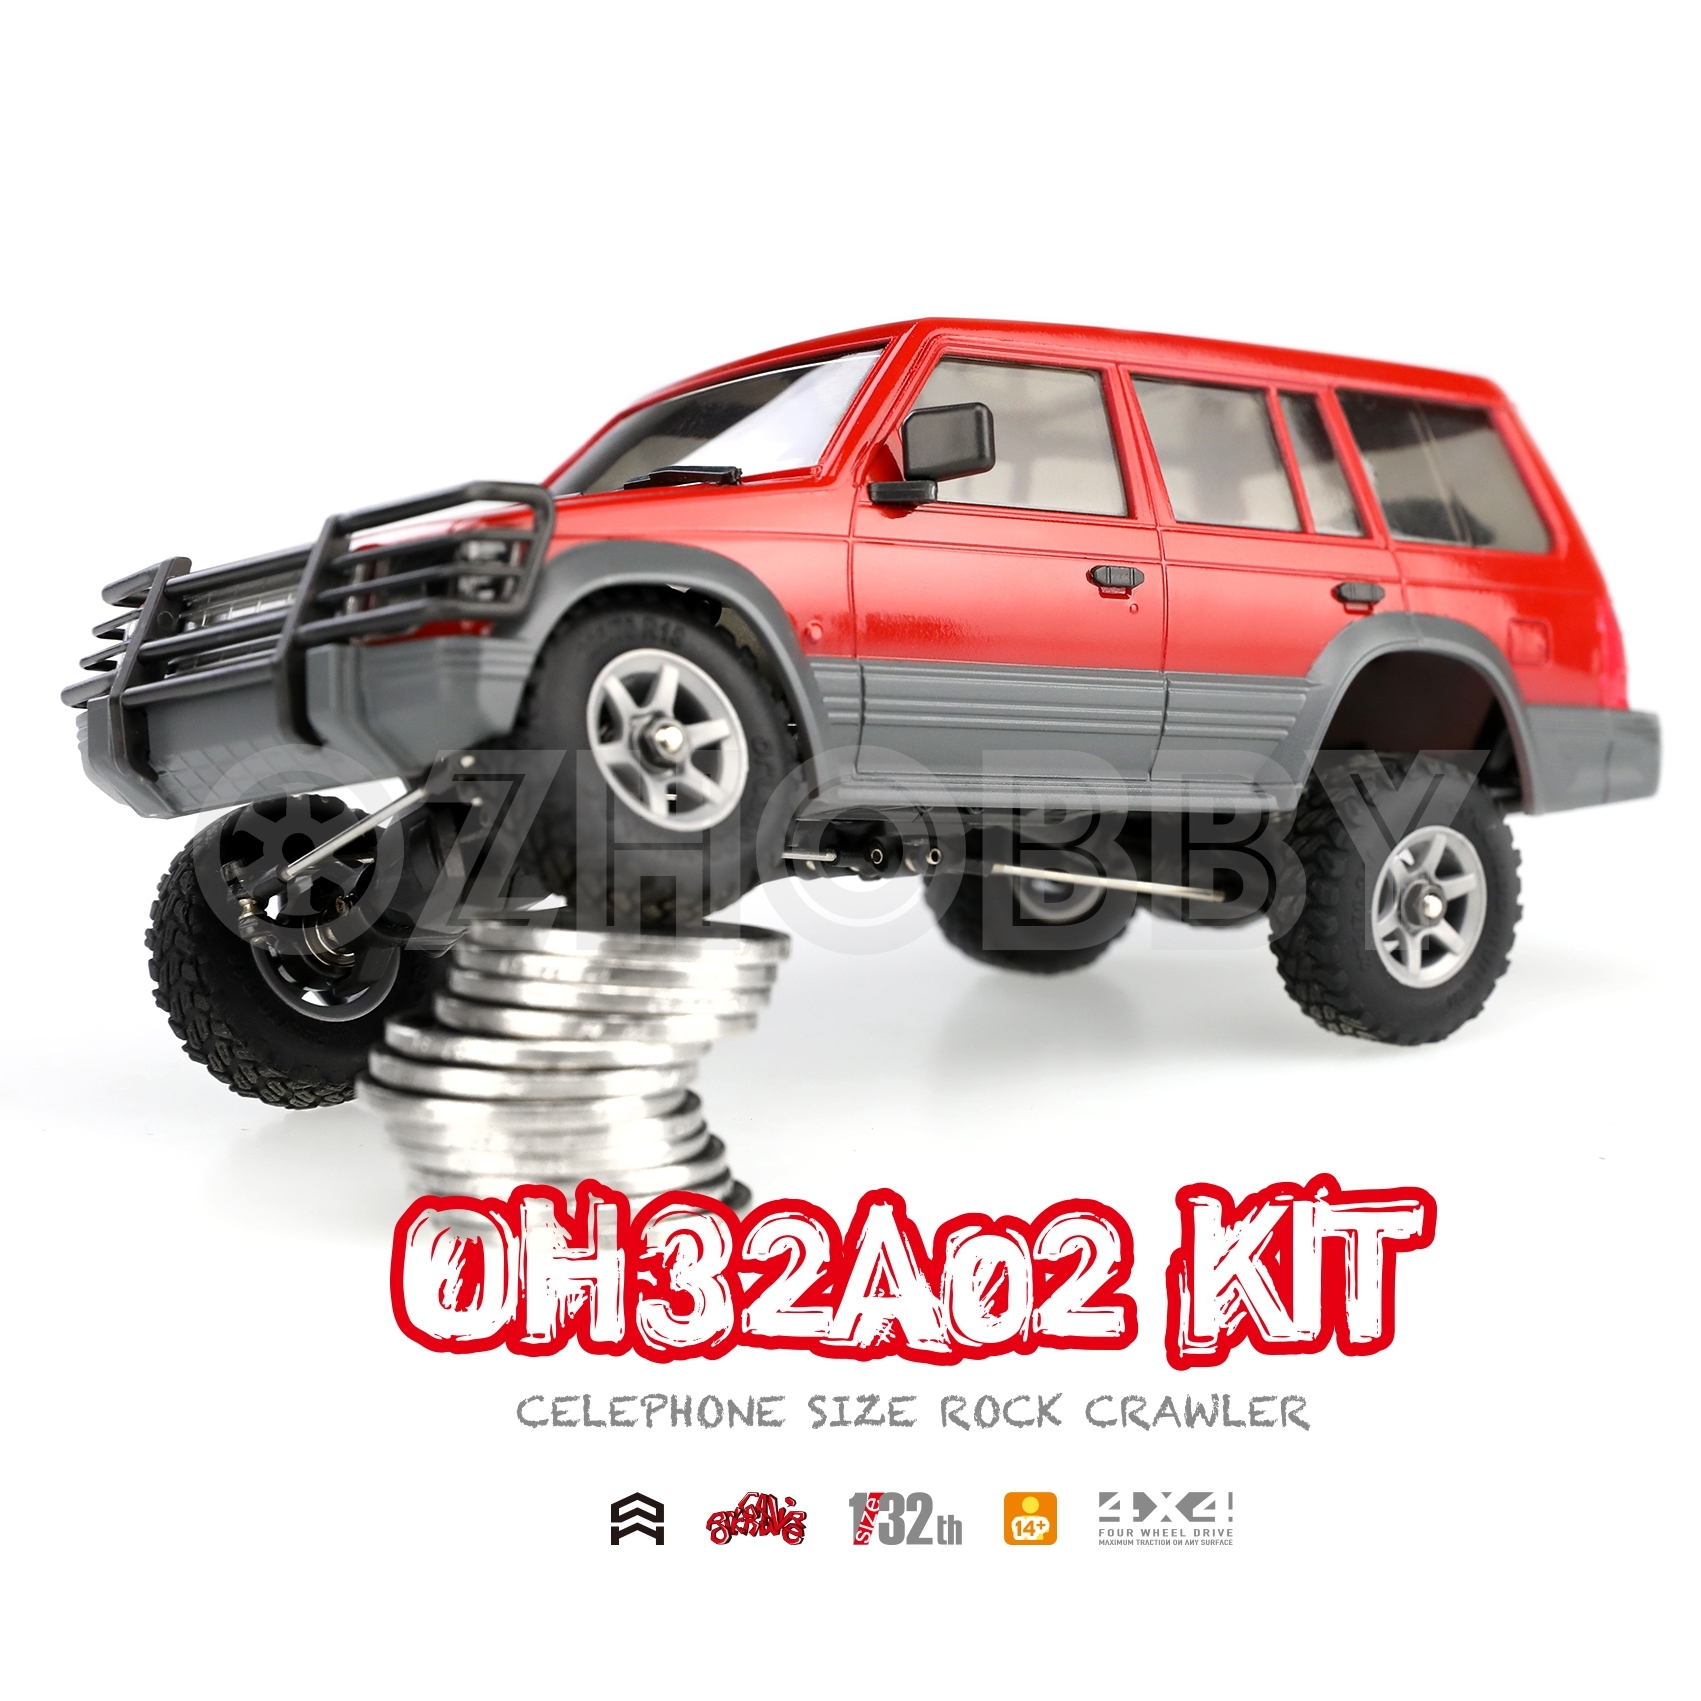 Orlandoo Hunter 1/32 RC Crawler Assembly Kit OH32A02 w/ Pajero Body kit Only 